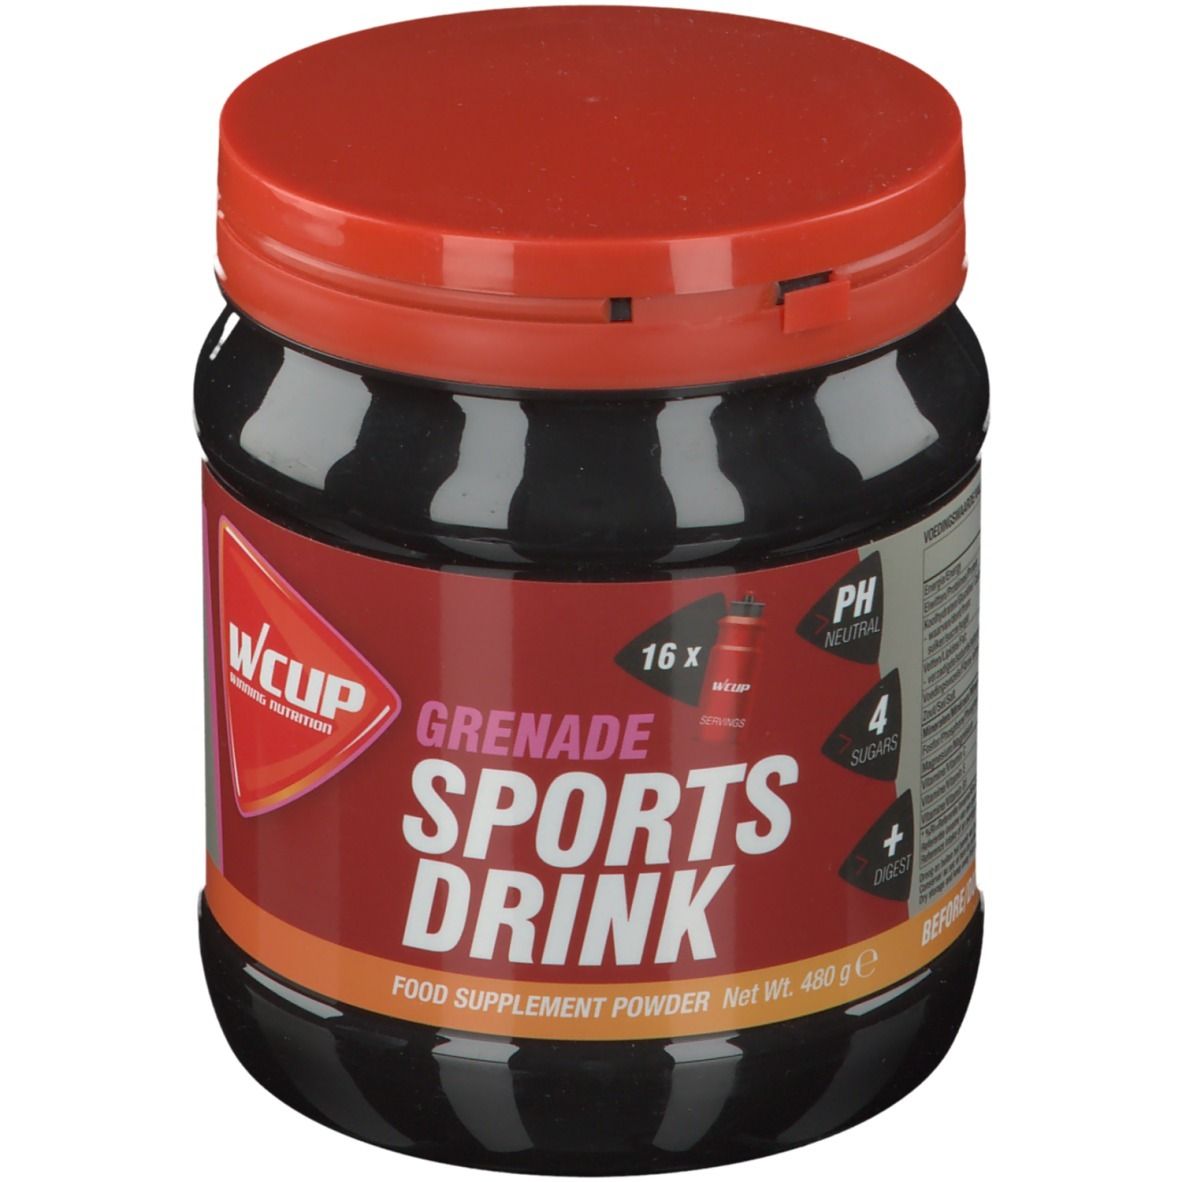 Wcup Sports Drink Granaatappel